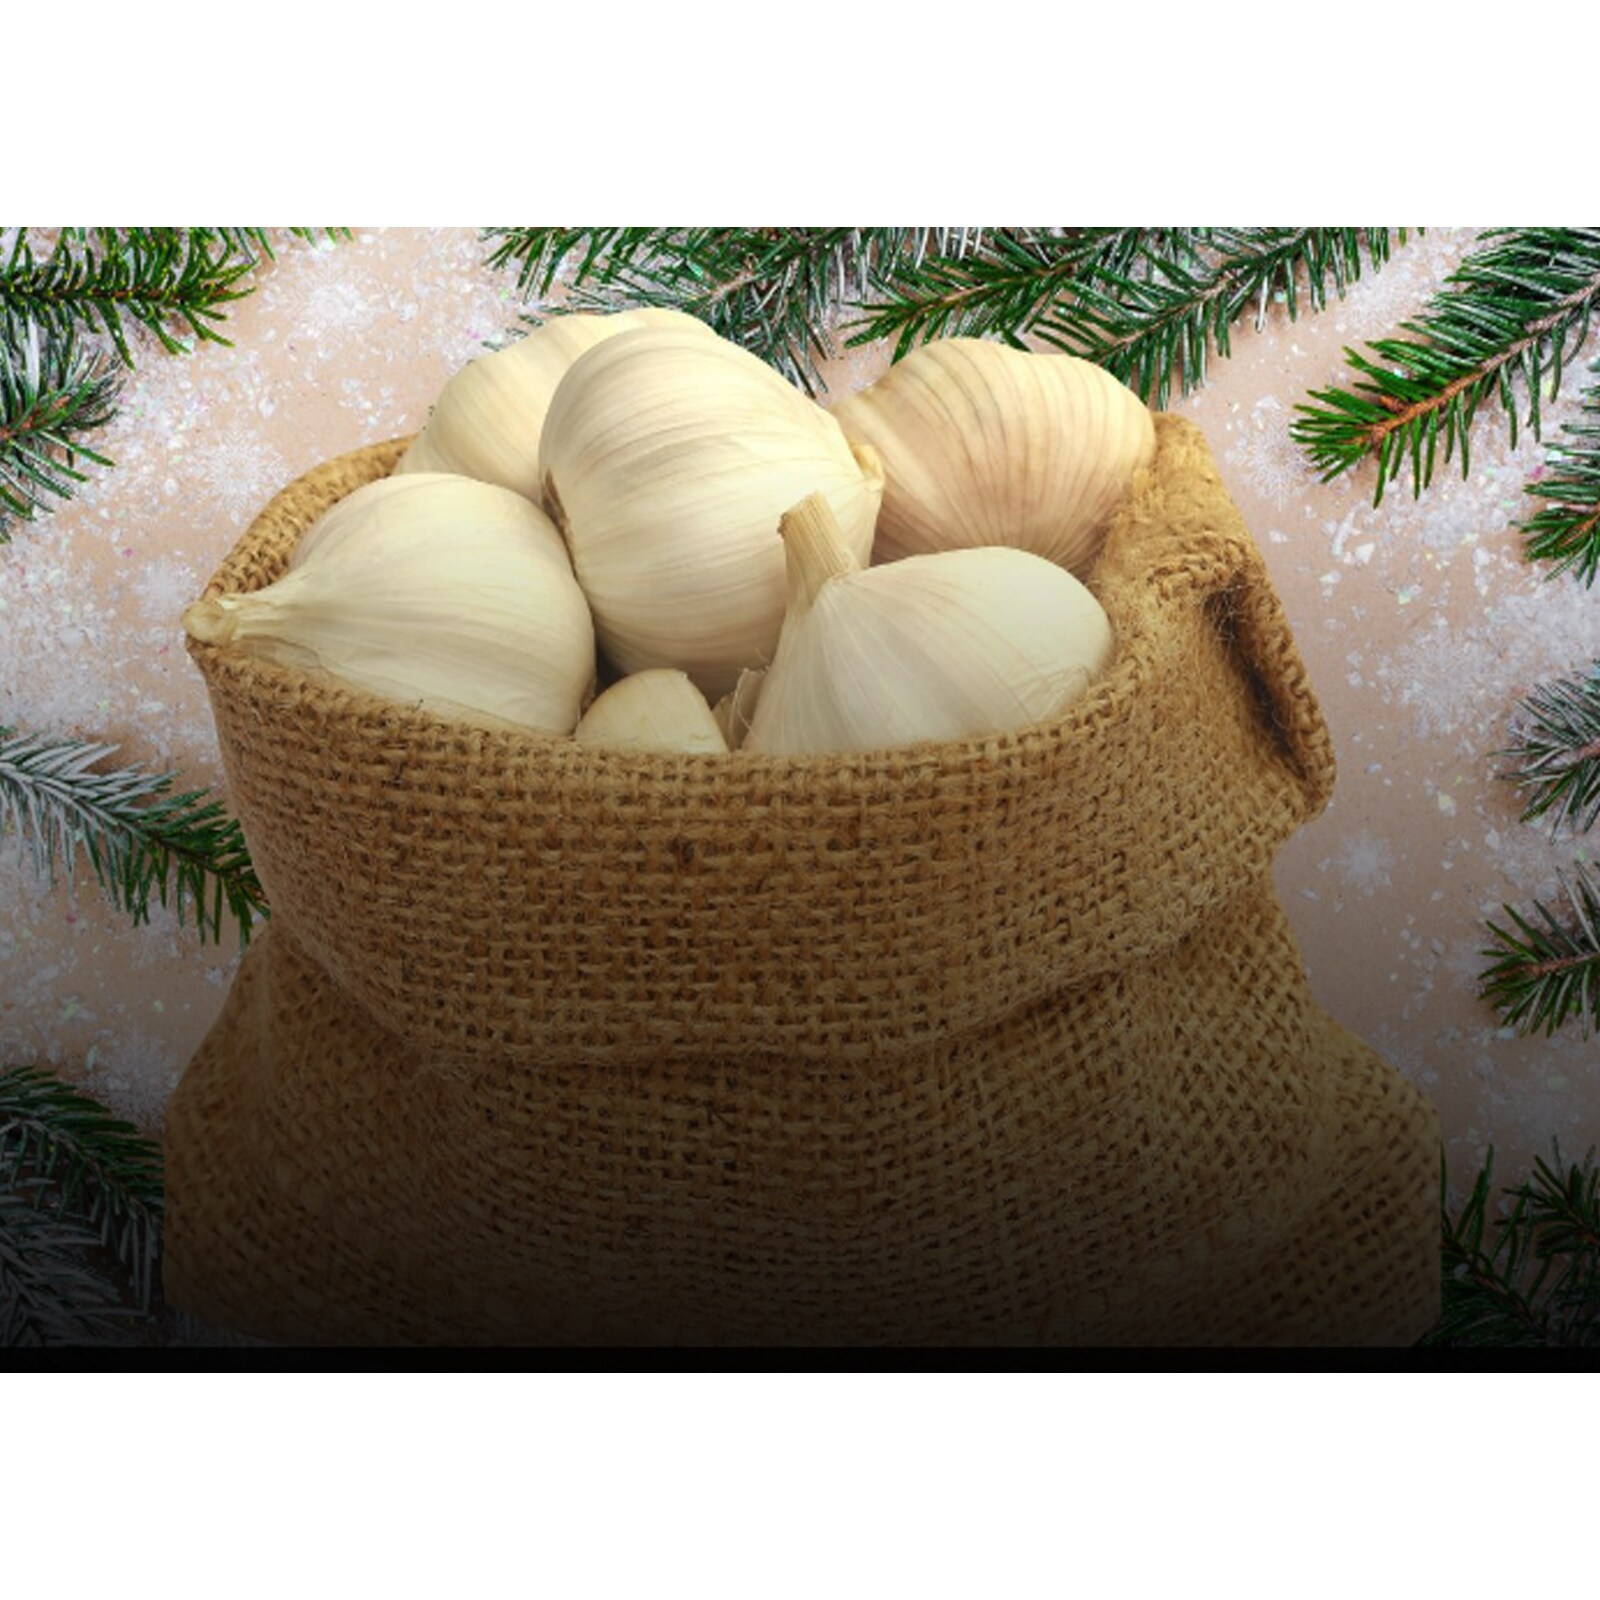 6 Health Benefits Of Eating Green Garlic In Winter Season